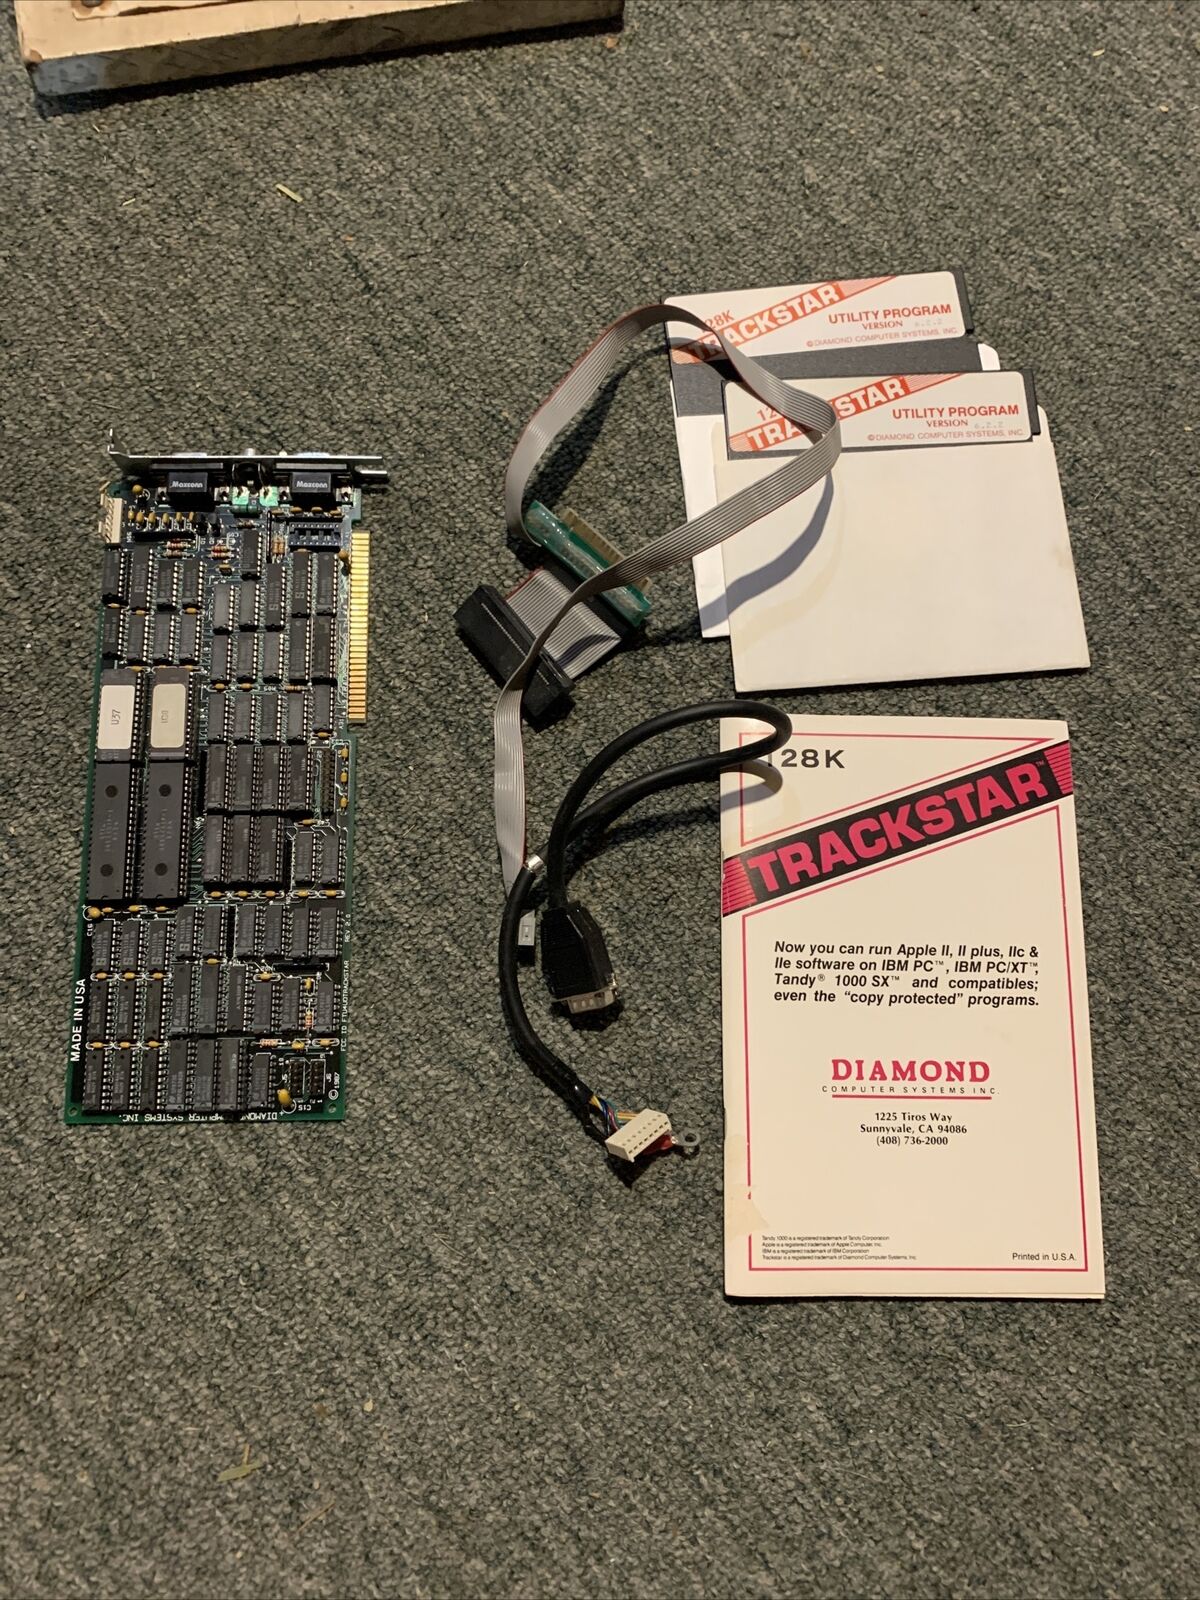 Diamond Trackstar 128K APPLE II EMULATOR CARD For Tandy 1000 / SX - Apple II PC